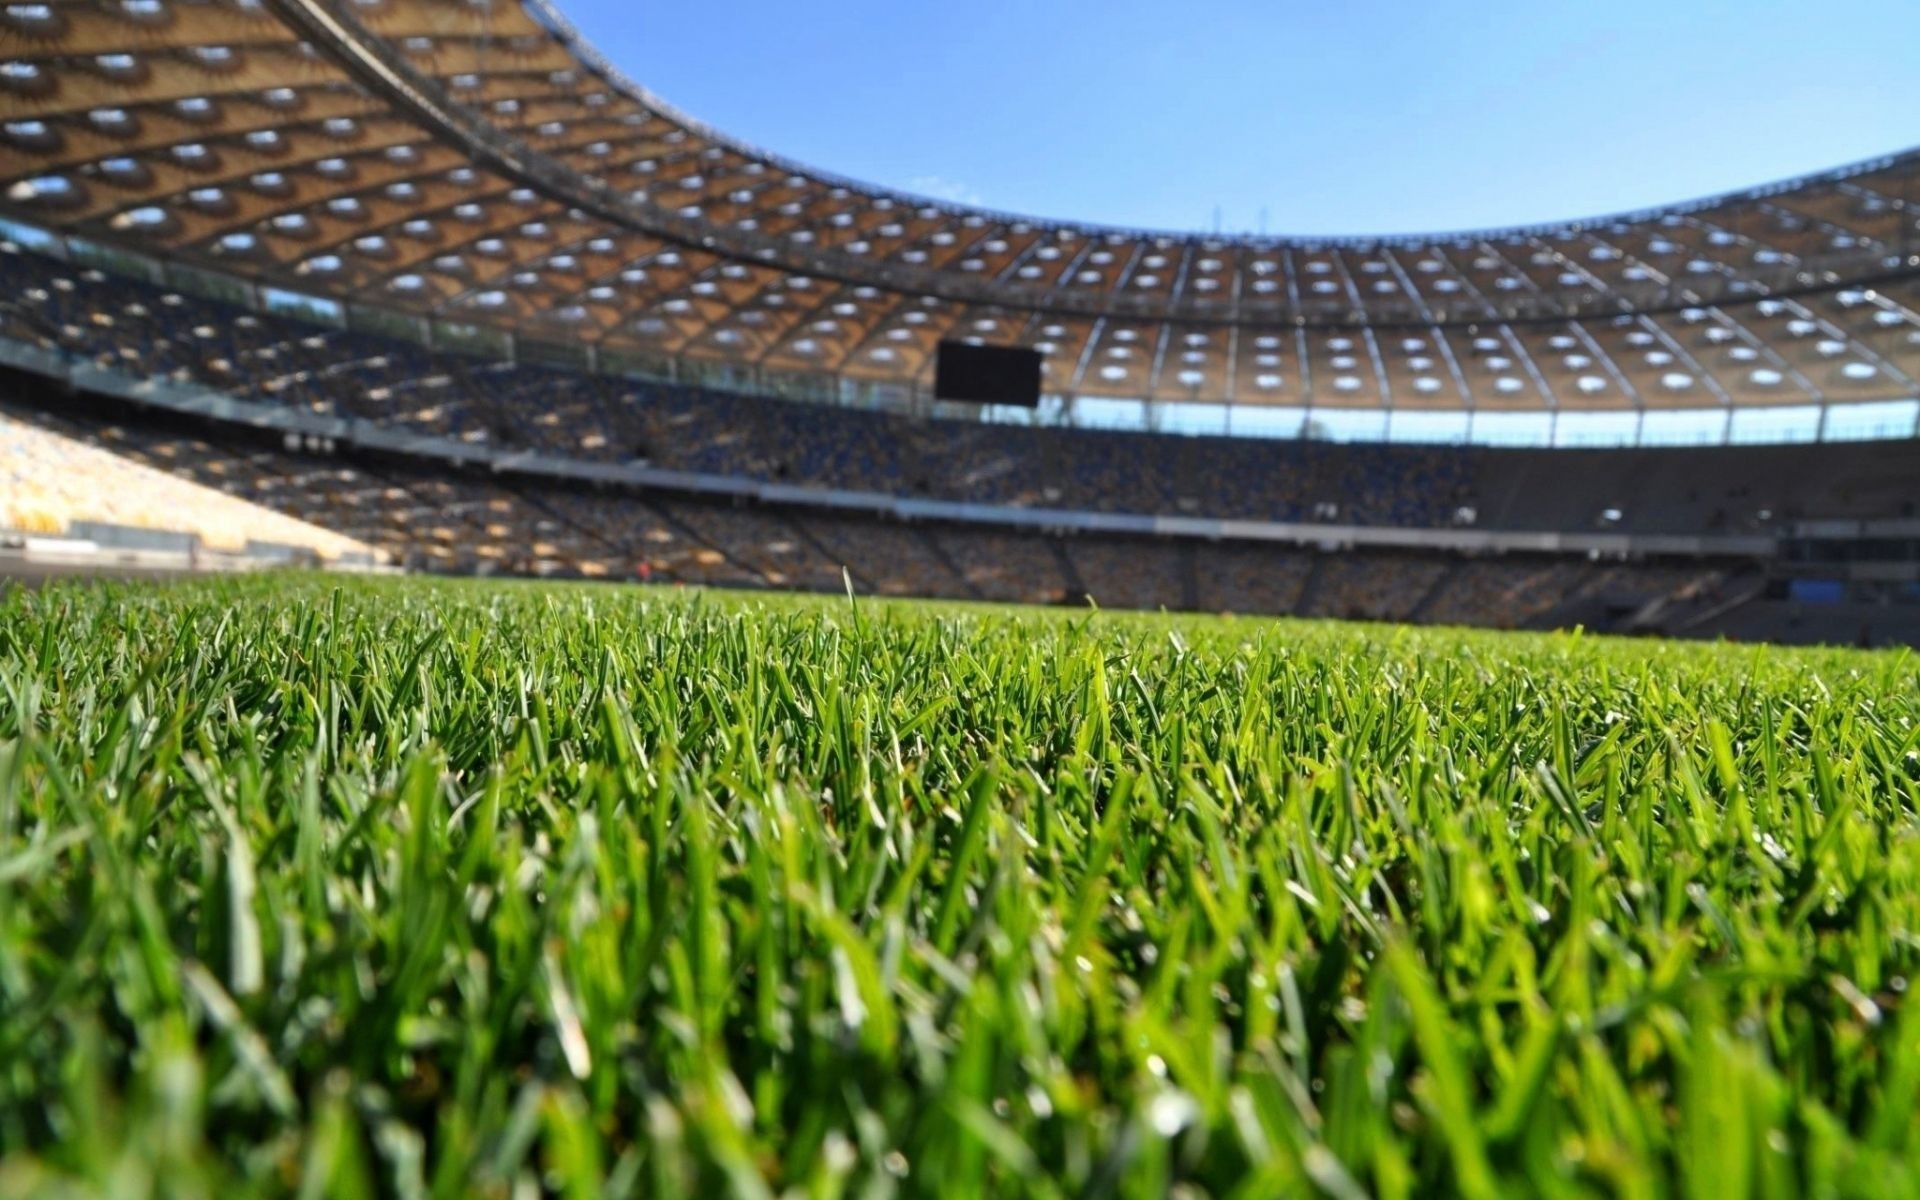 1920x1200 3000x2000 field, football, grass, soccer, soccer field, sports field, stadium  wallpaper and background